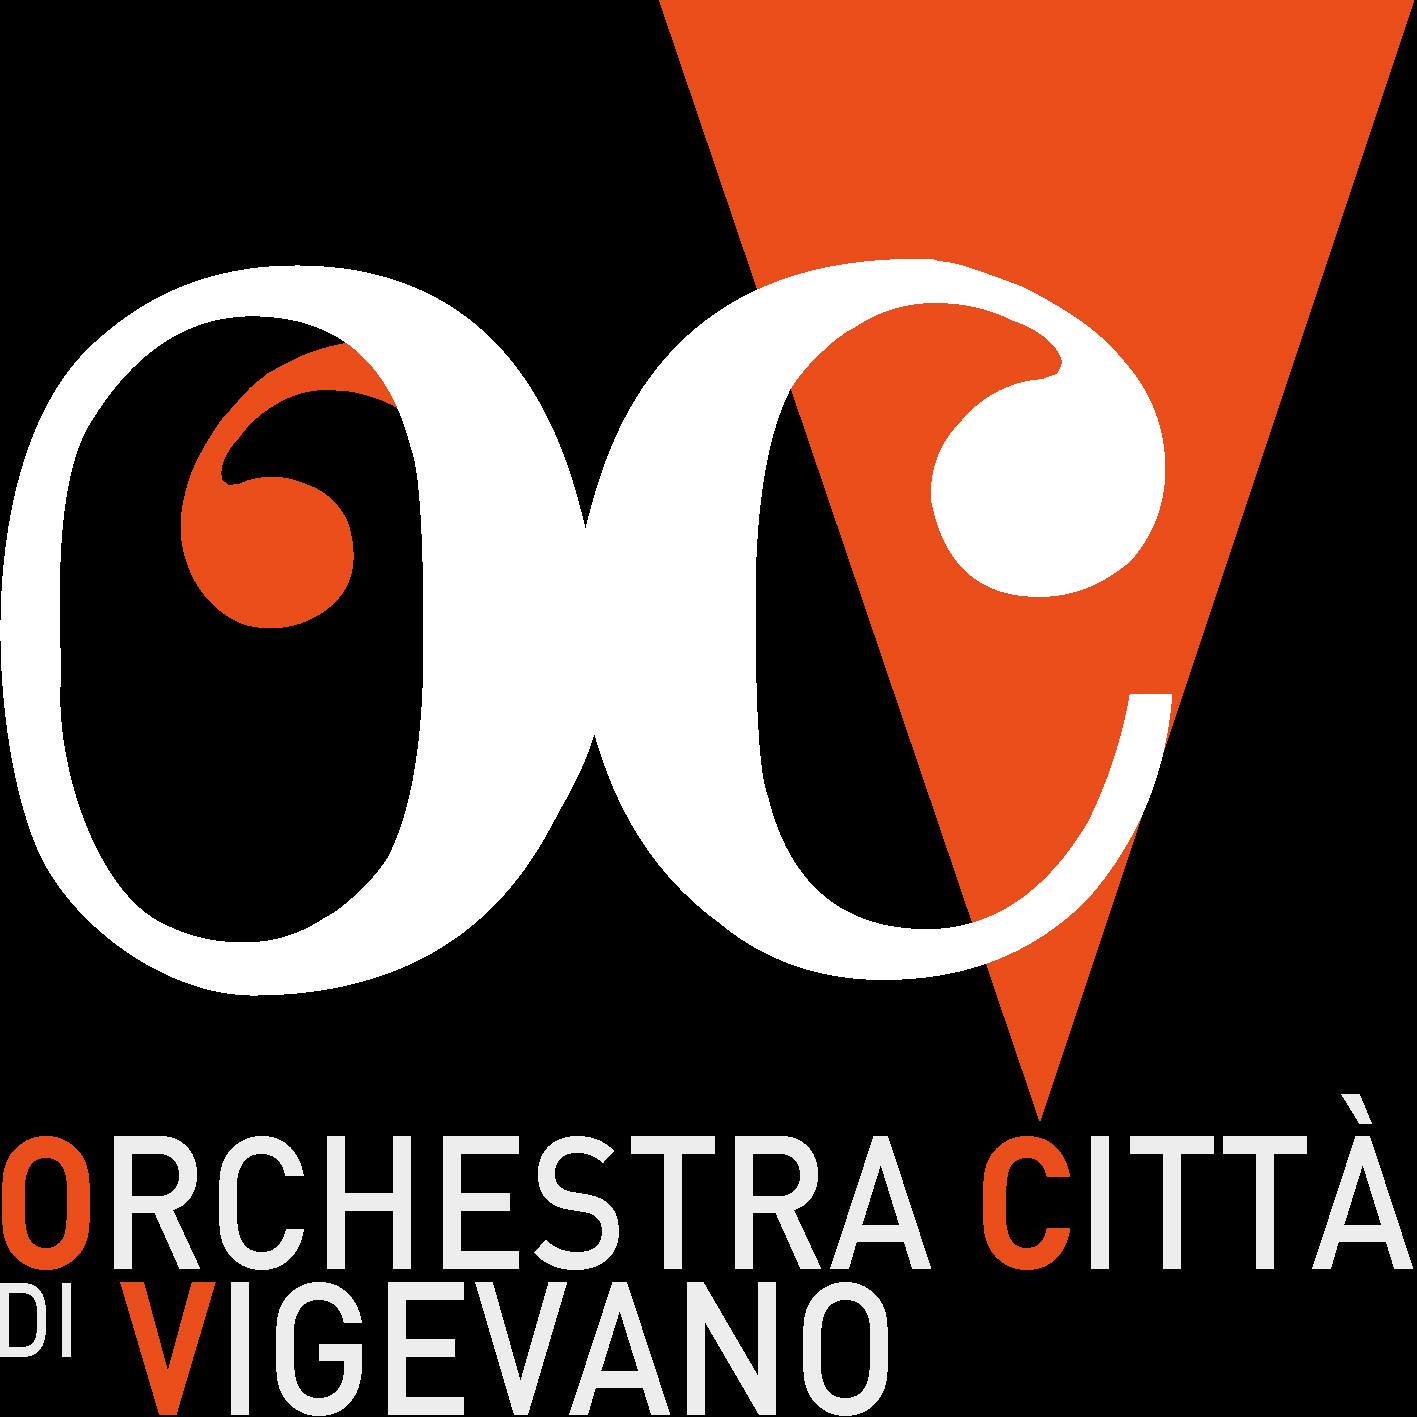 orchestra citta vigevano logo